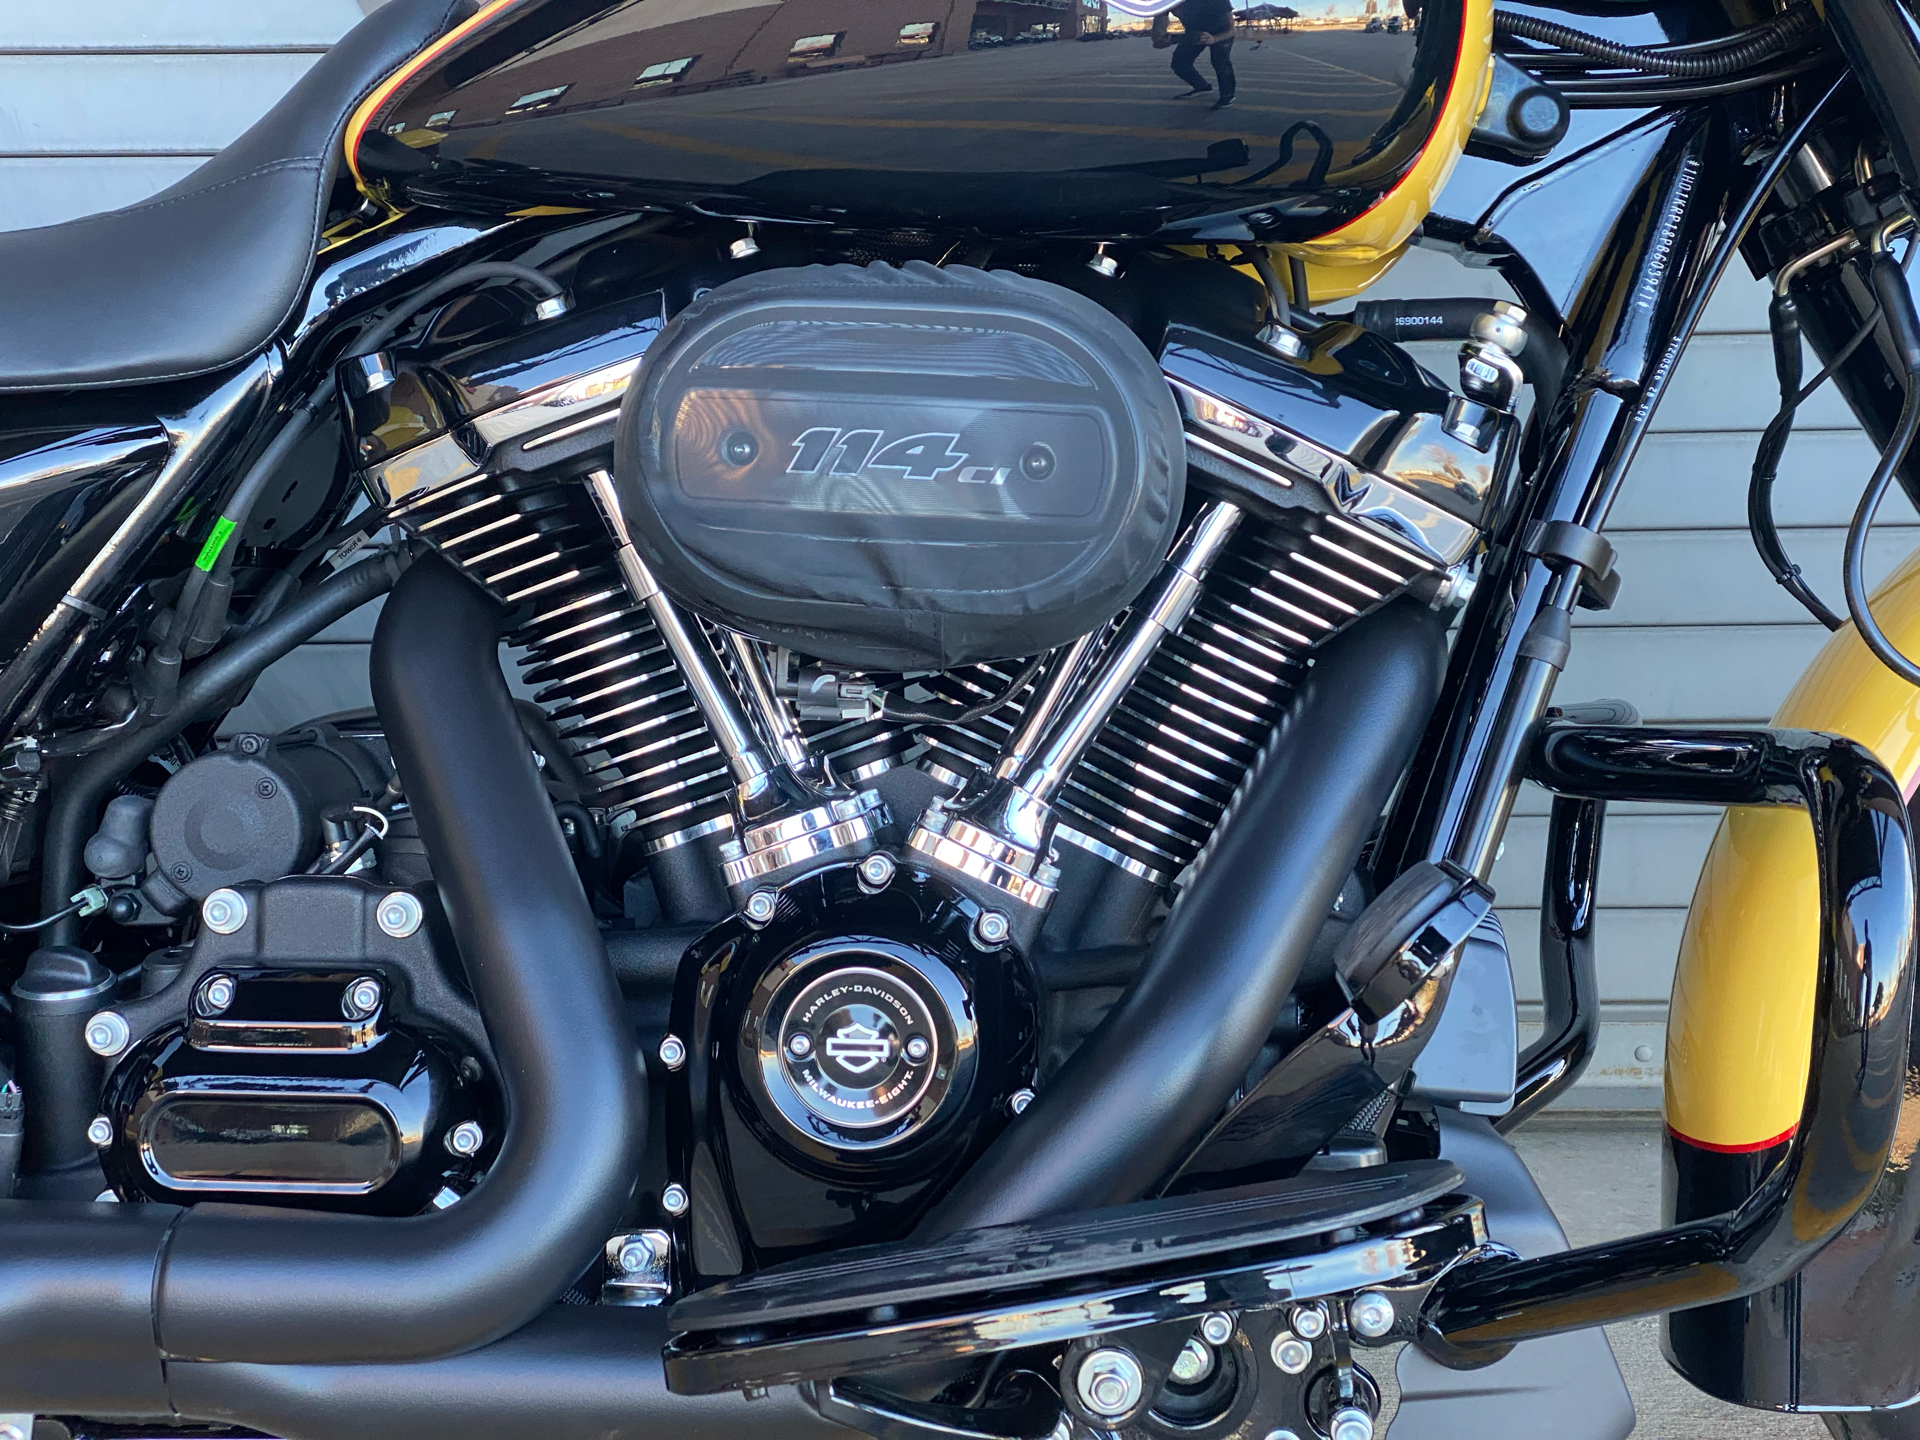 2023 Harley-Davidson Street Glide® Special in Carrollton, Texas - Photo 4